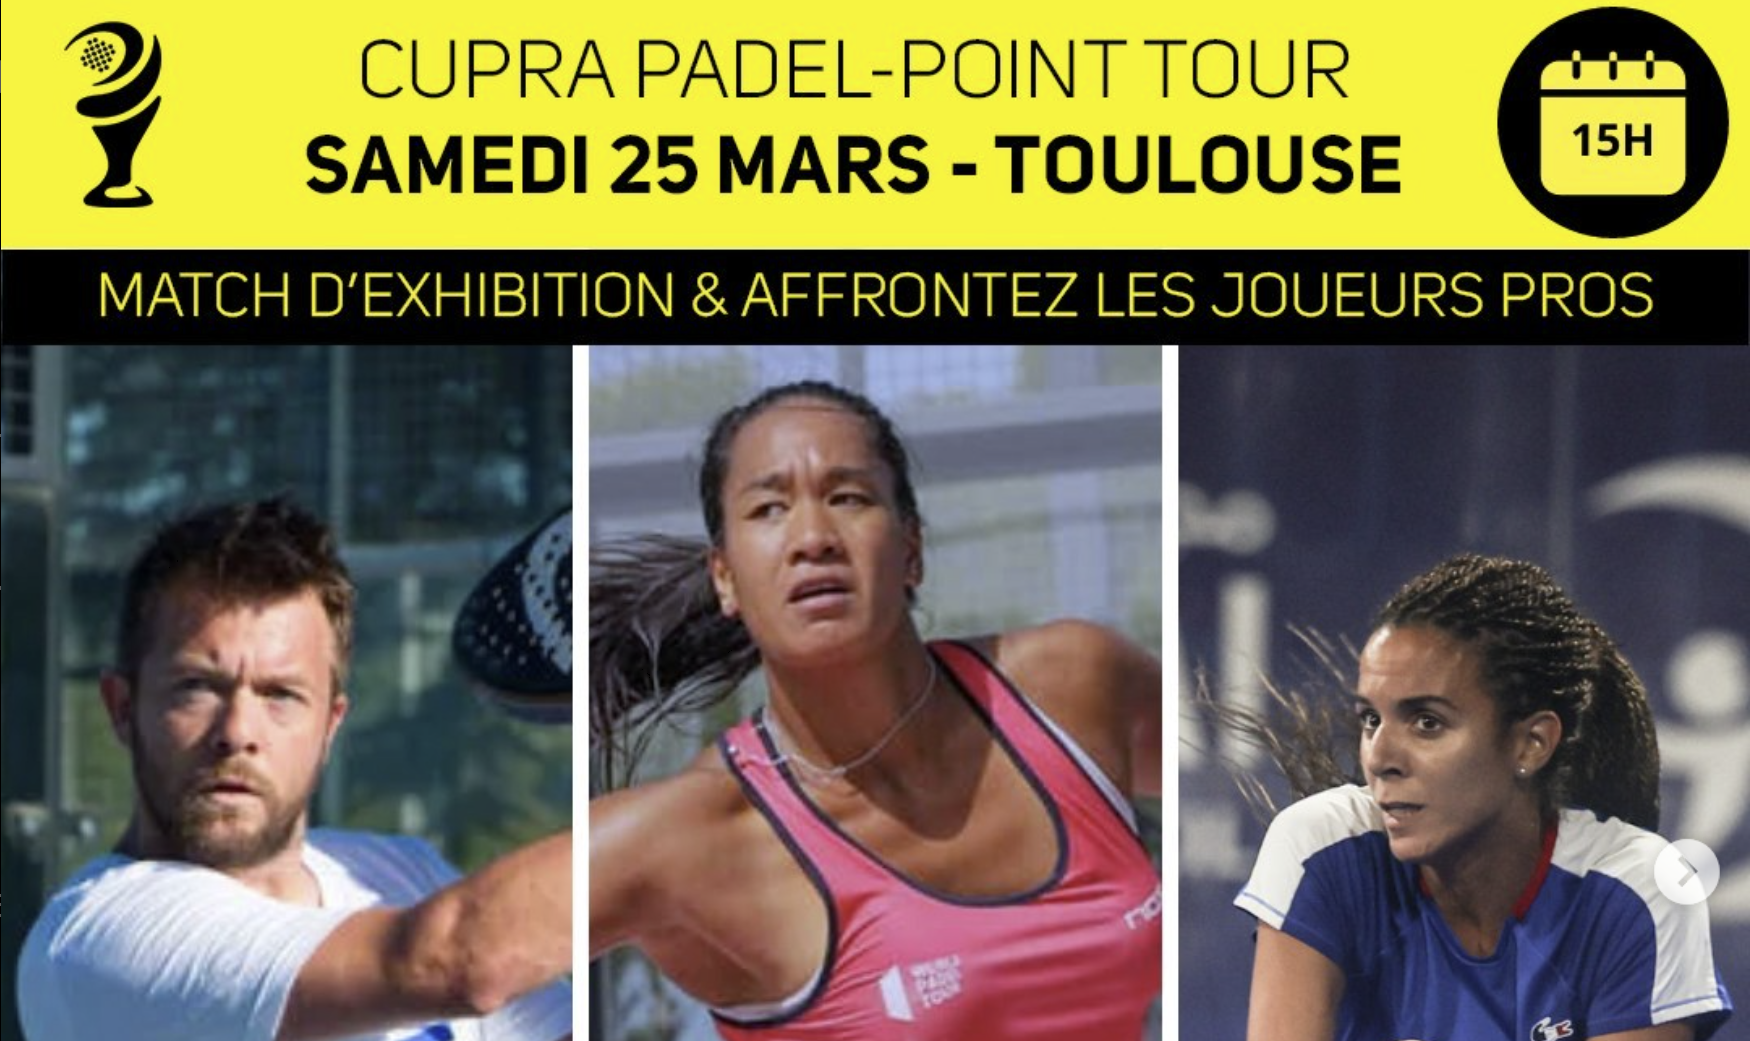 Cupra Padel-Point Tour poistua 4Padel Toulouse